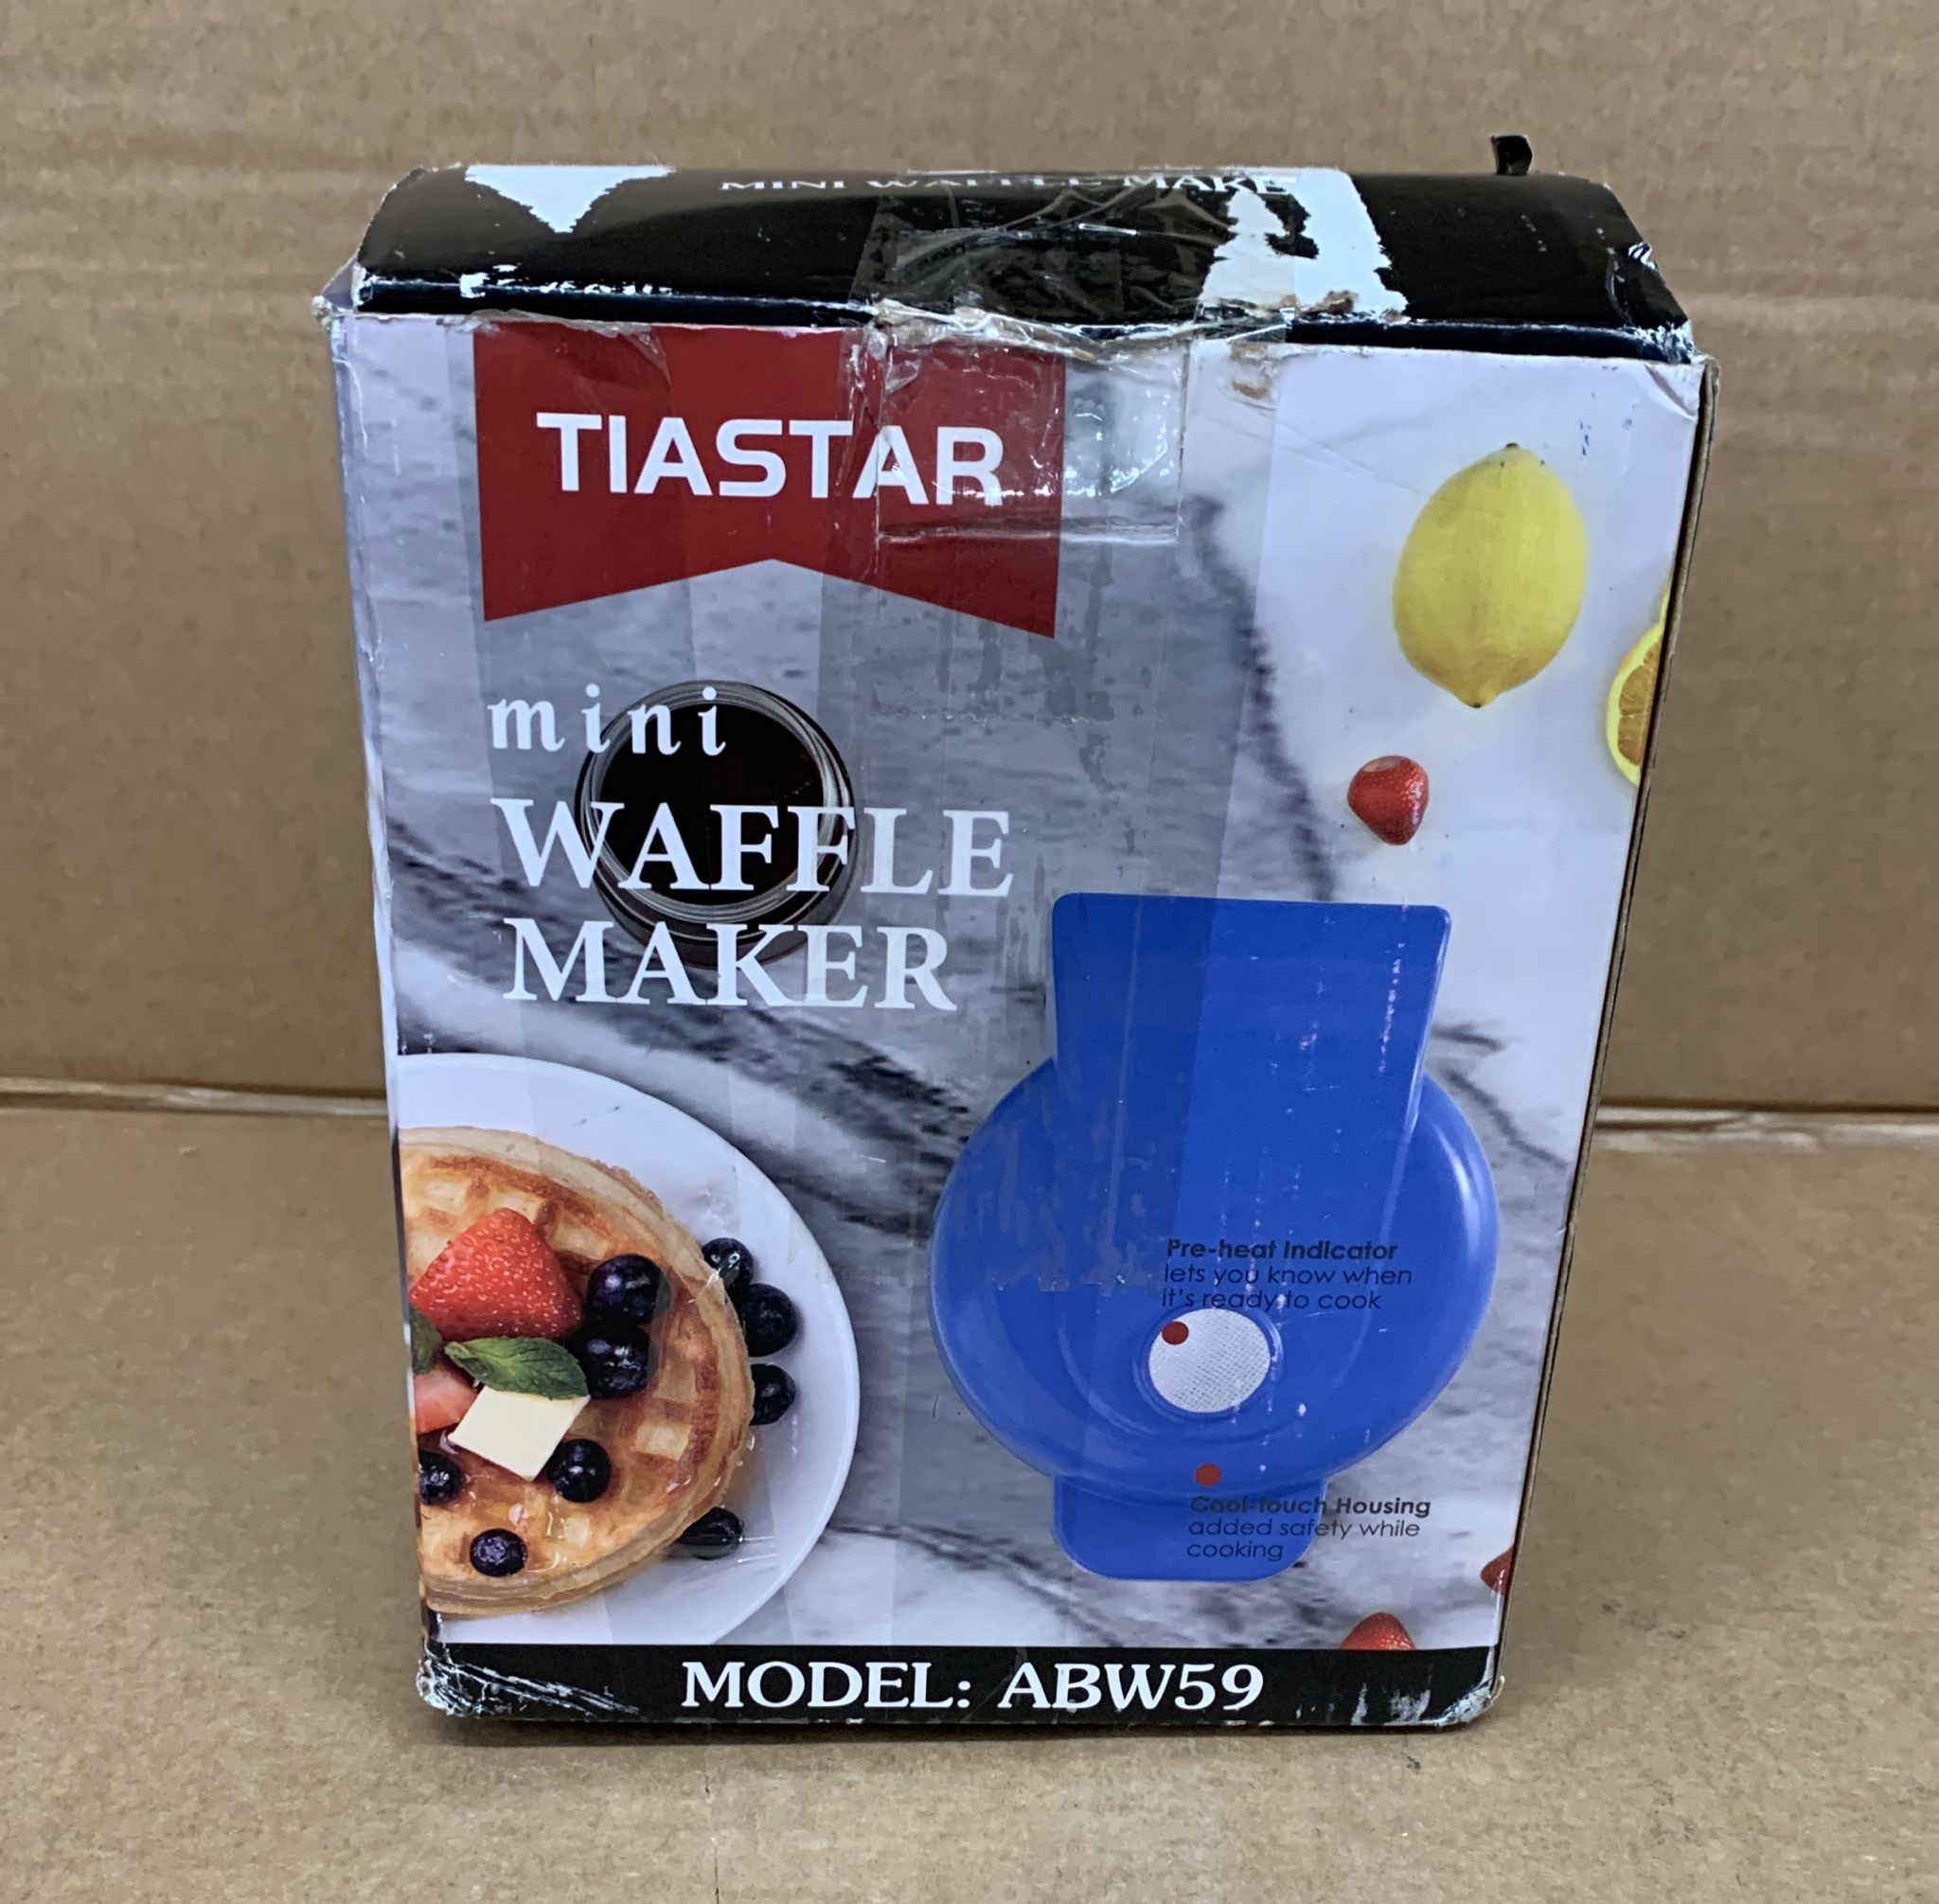 Tiastar Waffle Iron, Mini Waffle Maker- 0736